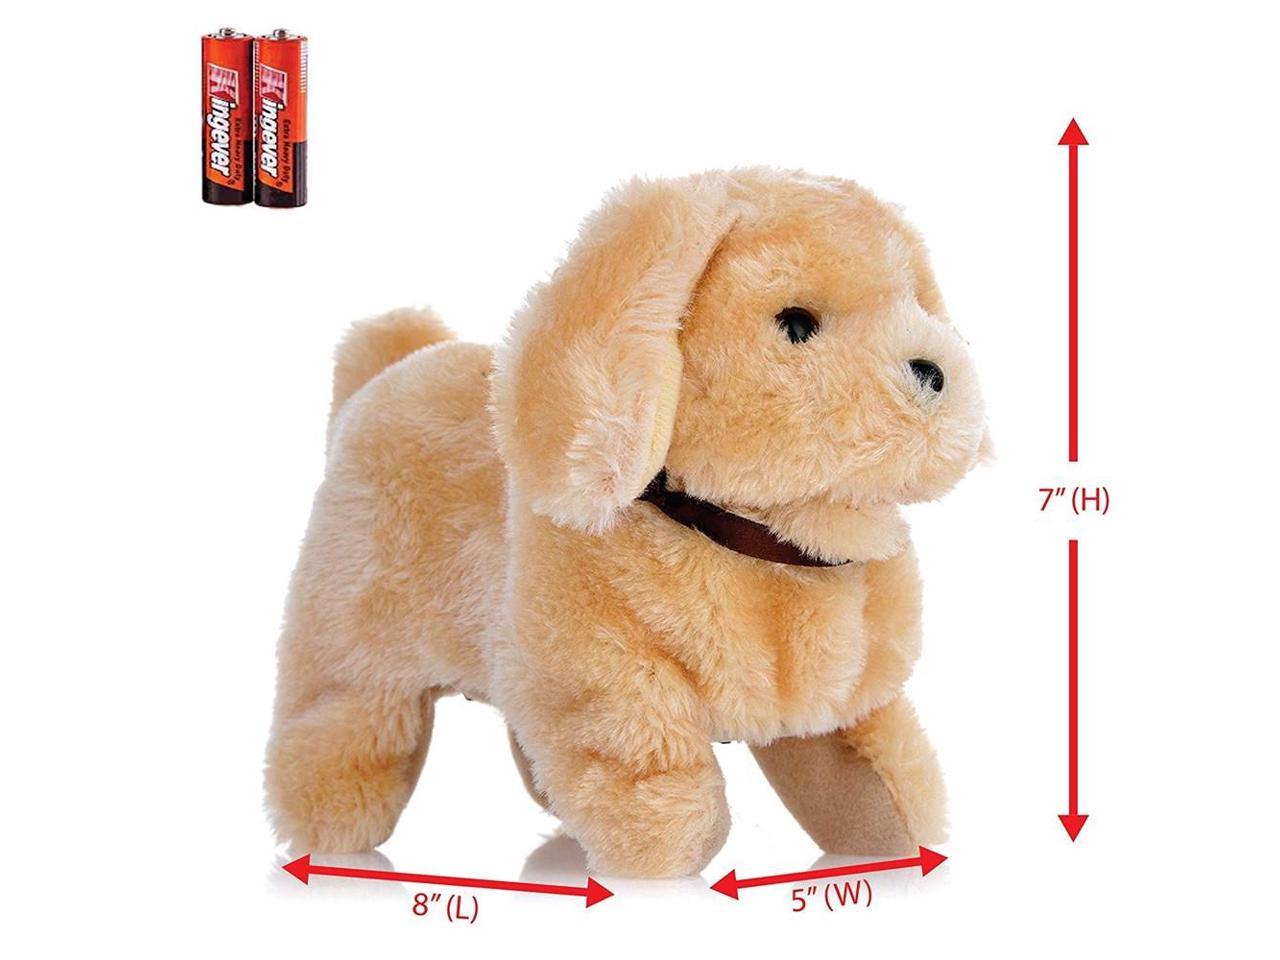 barking stuffed dog toy